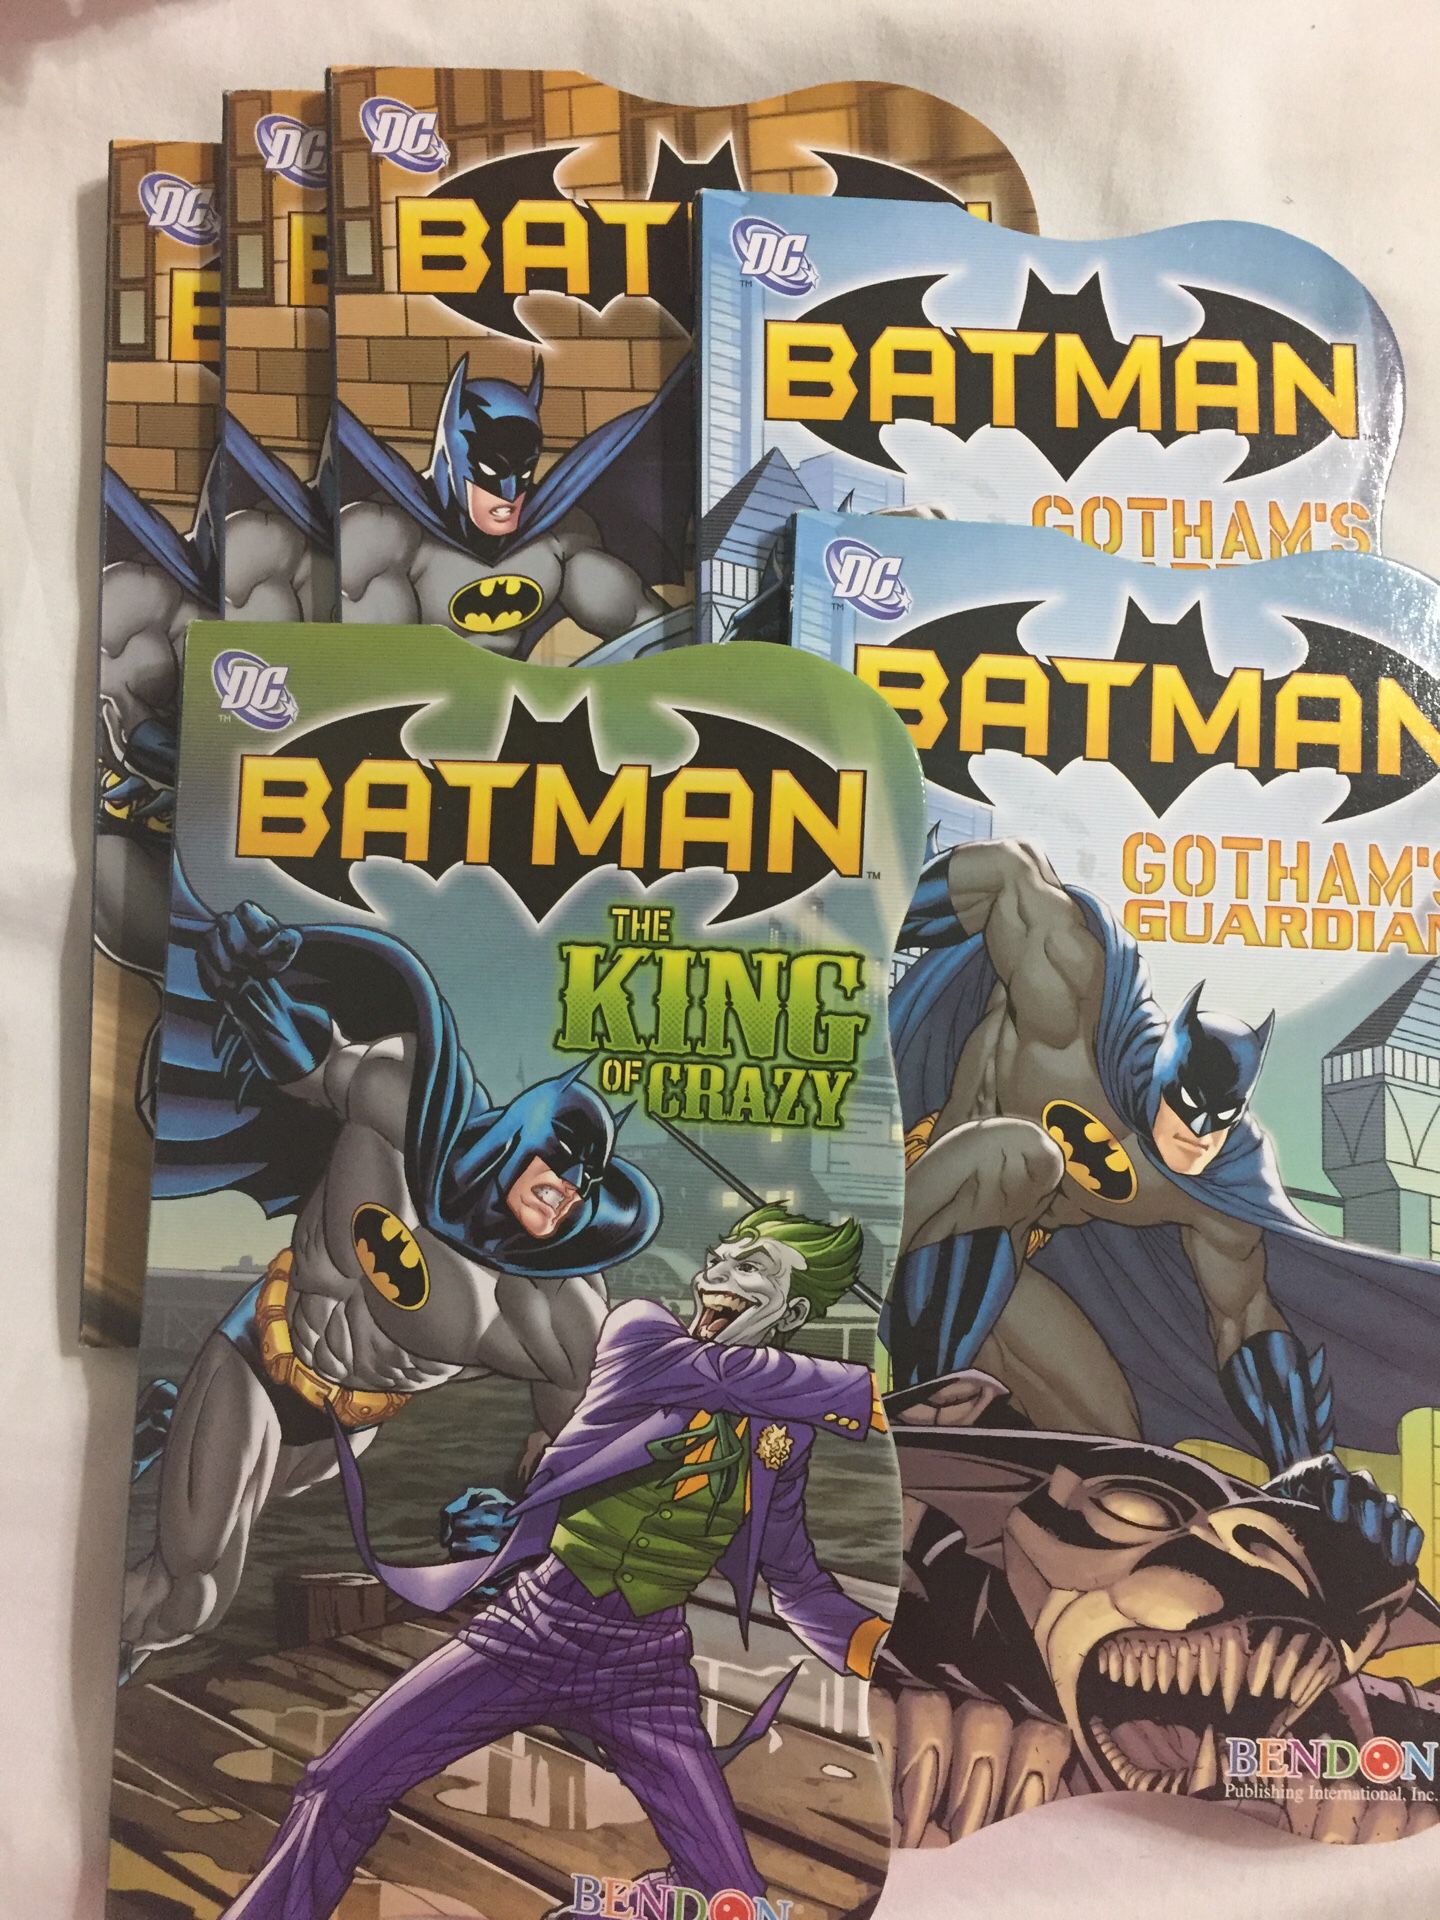 Batman 6 Hardback books & 3 Activity coloring books